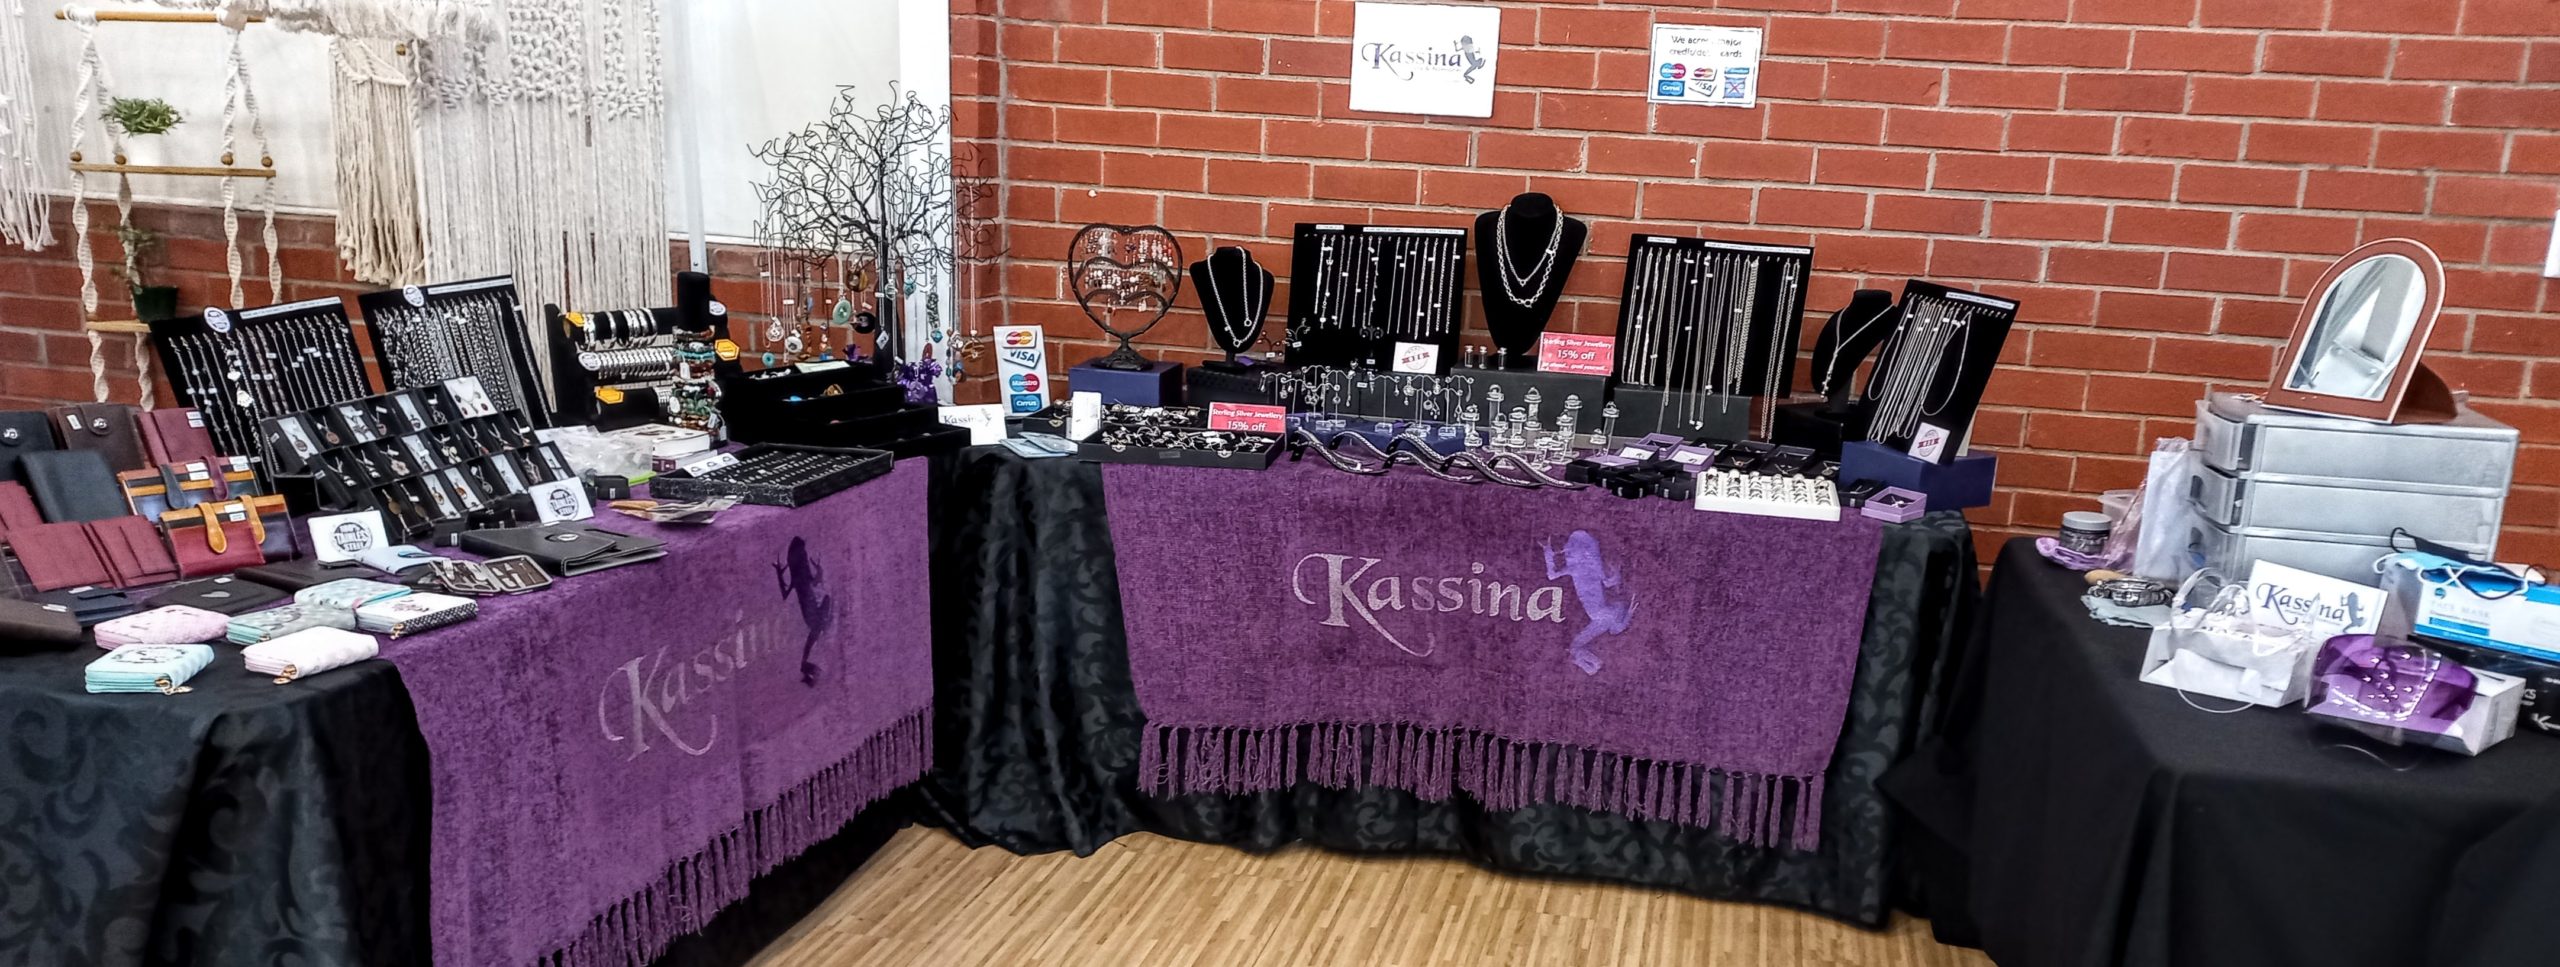 Kassina Jewellery & Accessories